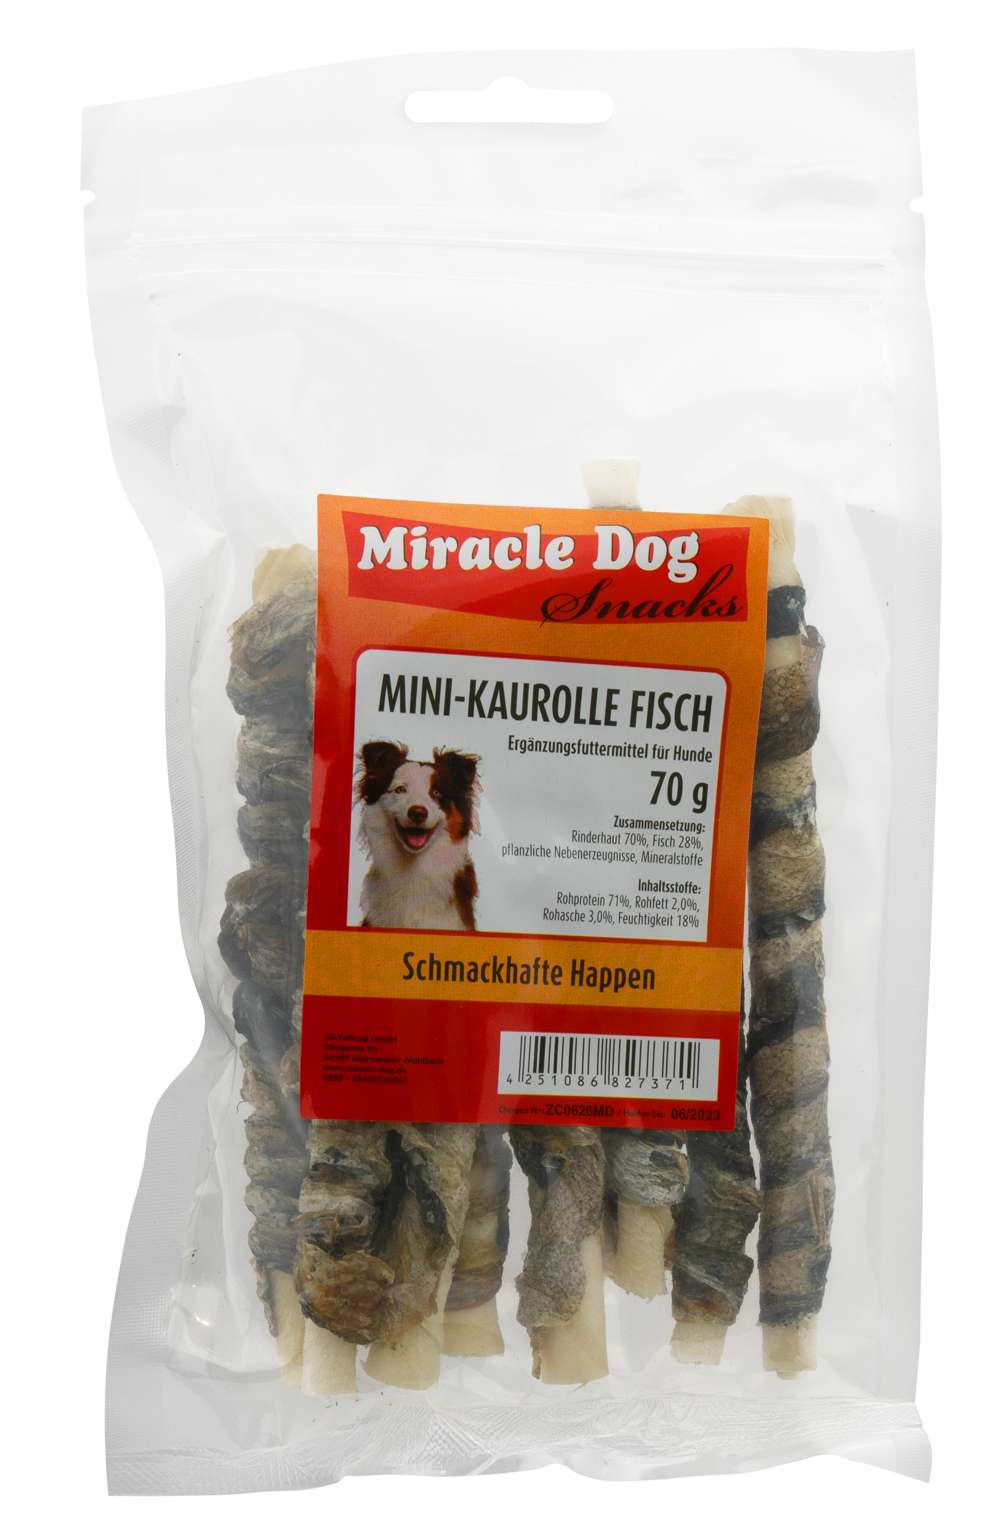 Miracle Dog Mini Kaurolle